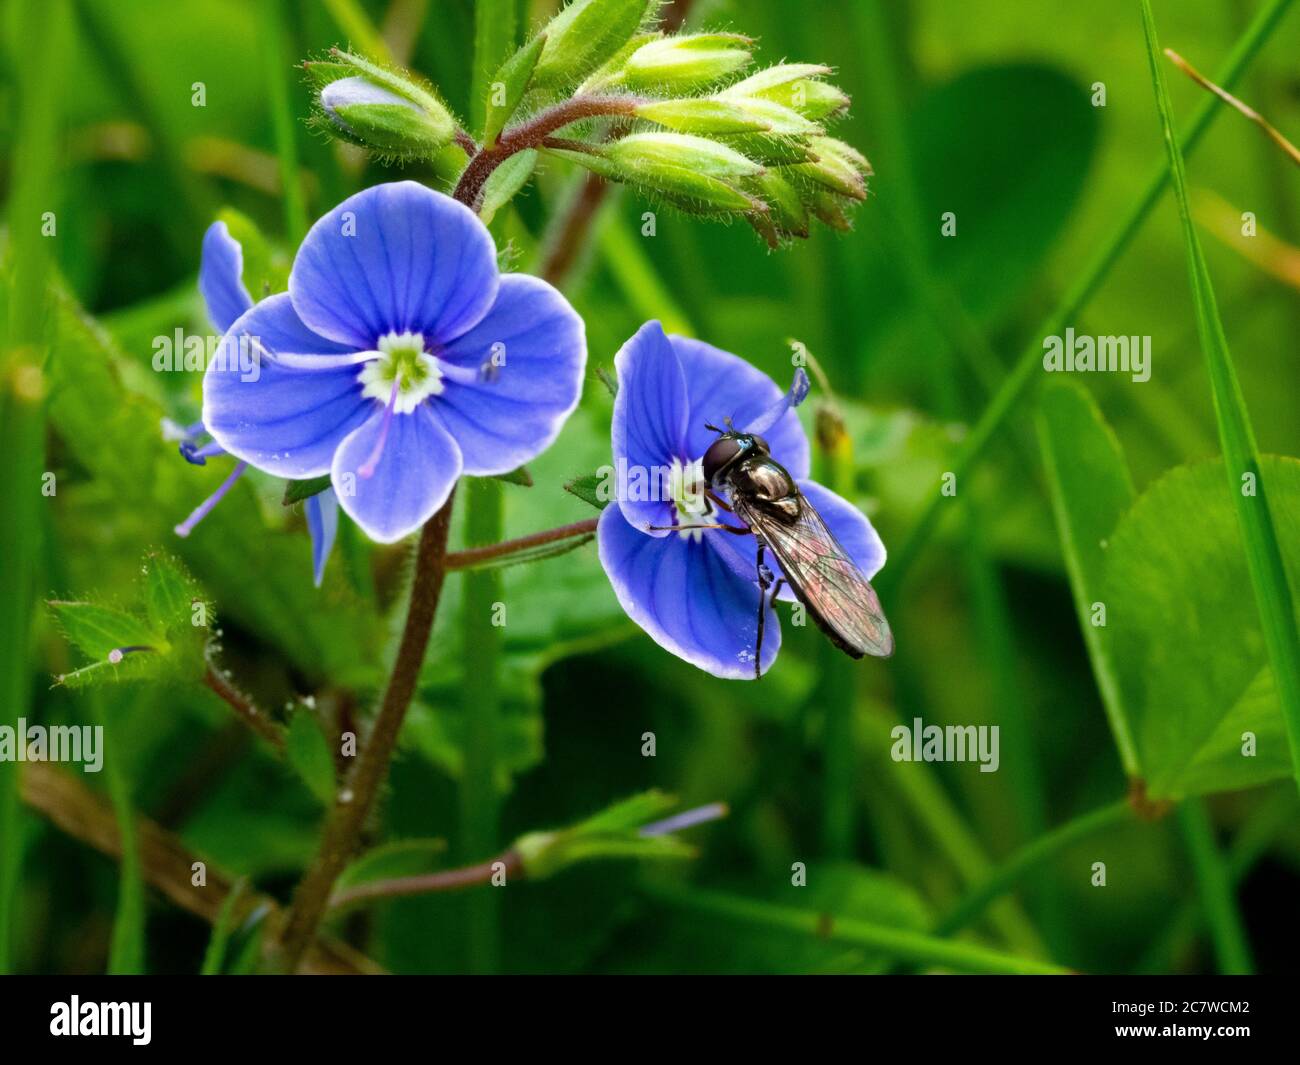 Soldier fly on a Germander speedwell, Veronica chamaedrys, flower, Dartmoor, Devon, UK  July, Stock Photo